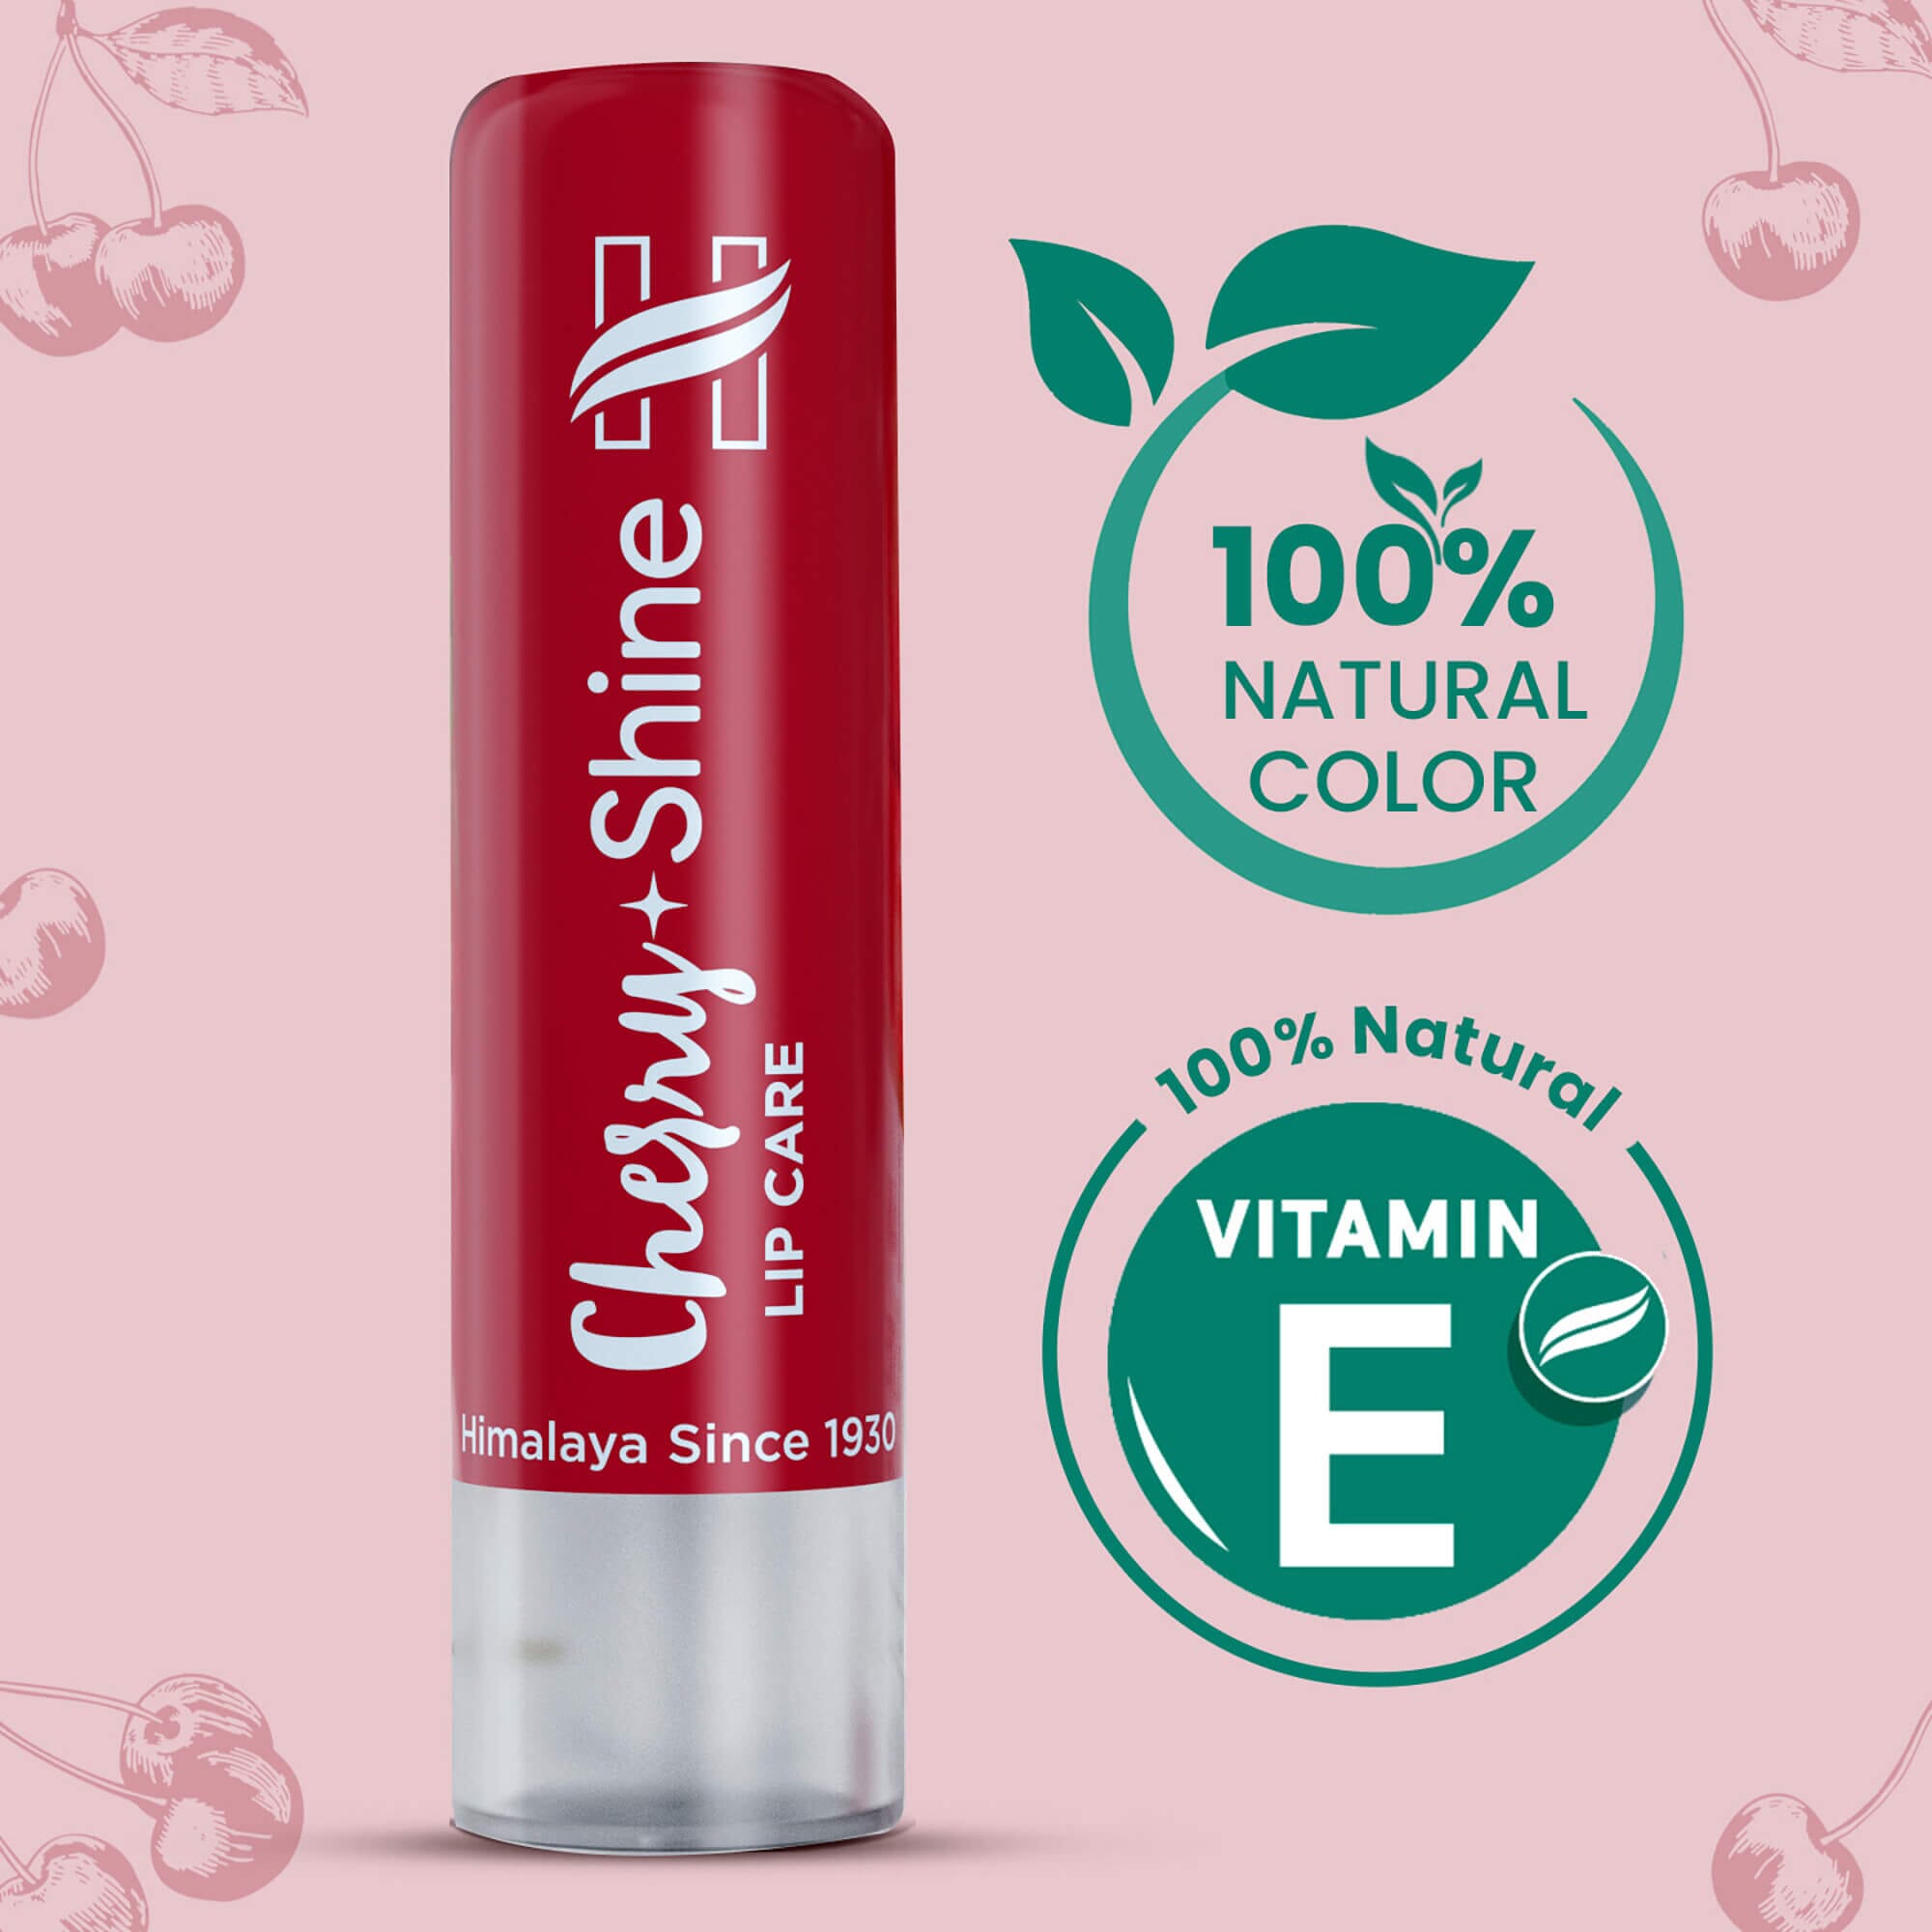 Himalaya Cherry Shine Lip Care 4.5g - 100% Natural Vitamin E